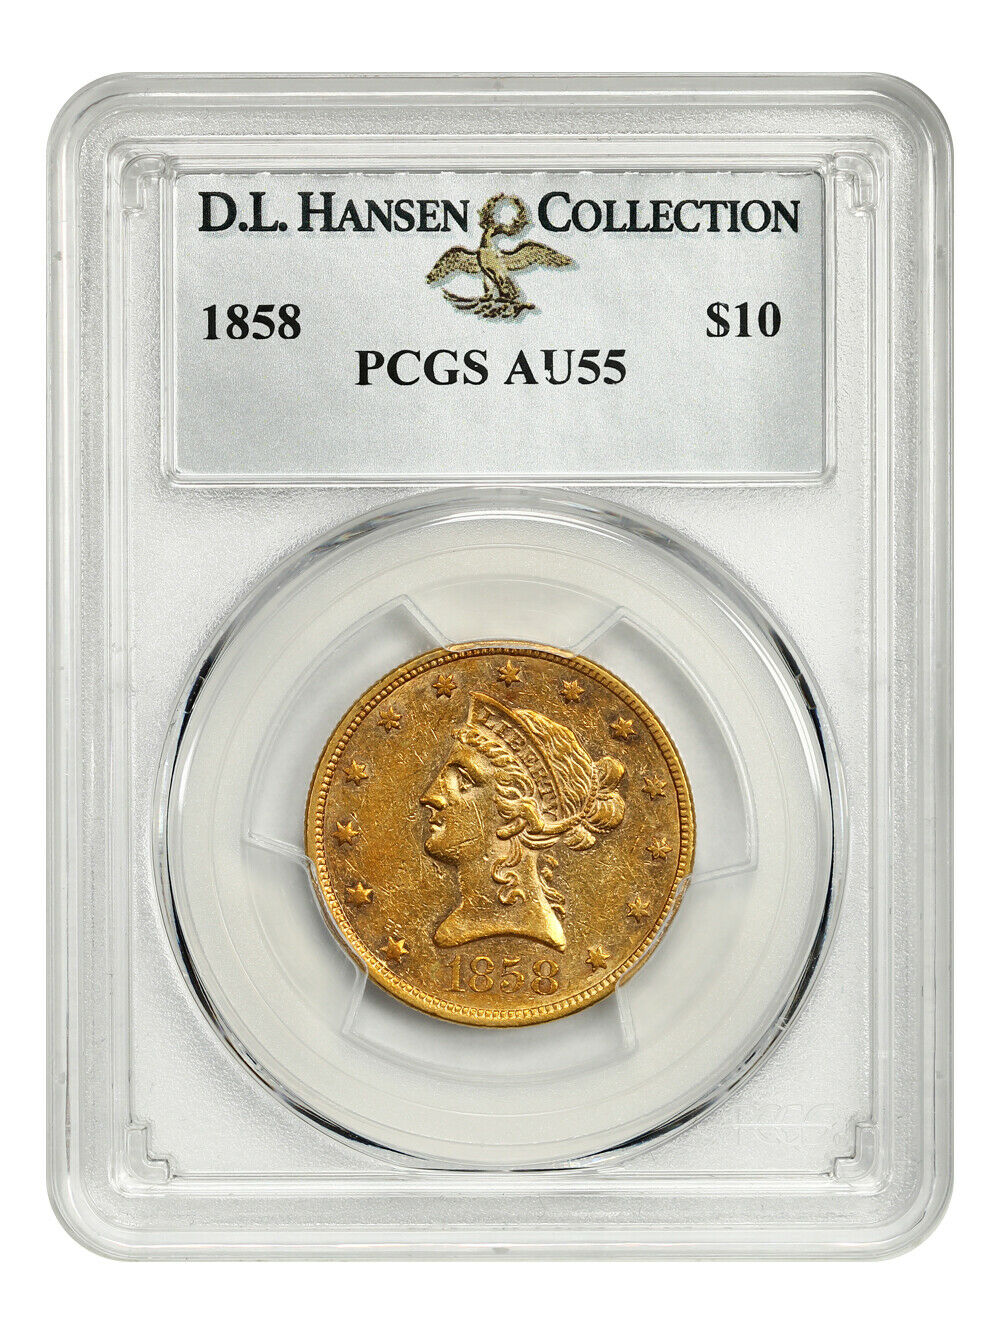 1858 $10 Pcgs Au55 Ex: D.l. Hansen - Rare Issue! - Liberty Eagle - Gold Coin